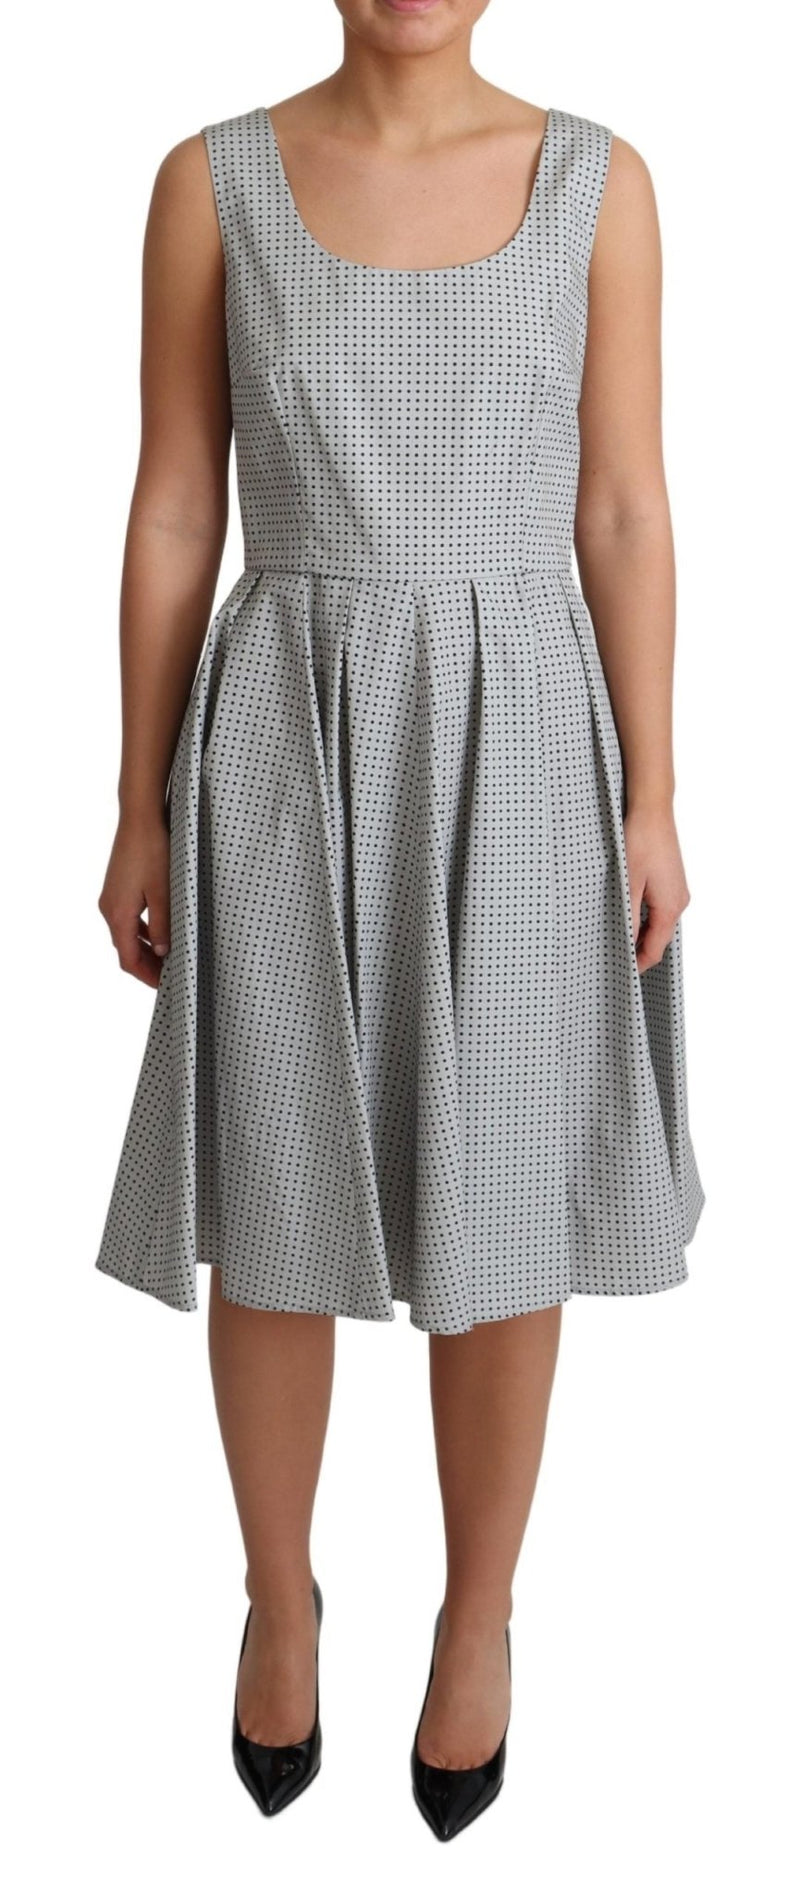 Gray Polka Dotted Cotton A-Line Dress - Avaz Shop